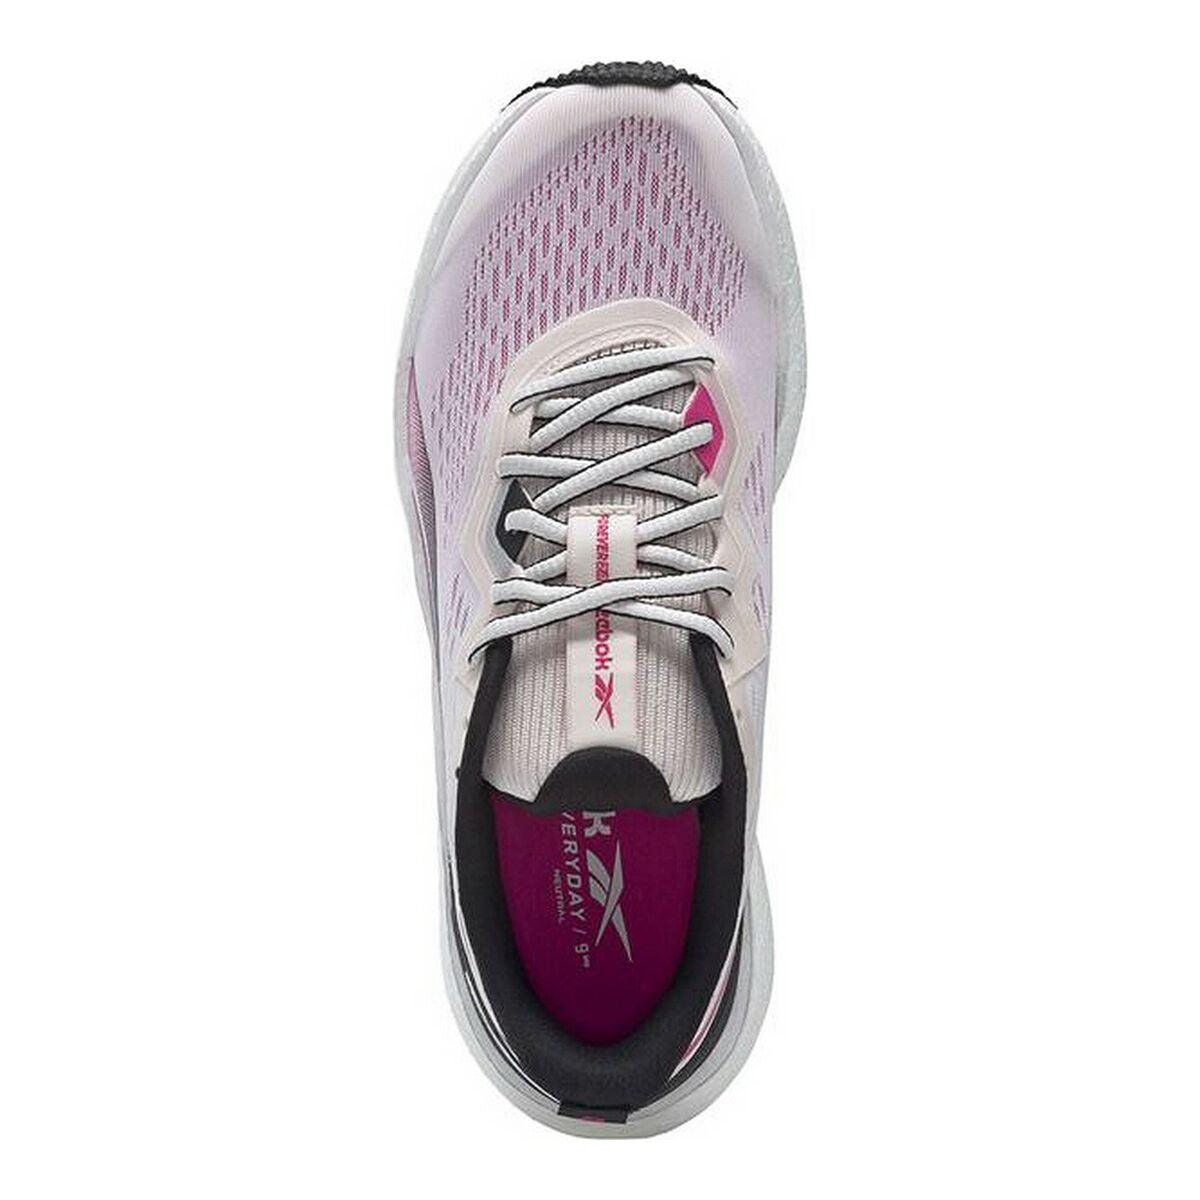 Sports Trainers for Women Reebok Forever Floatride Energy Grey Pink - BOMARKT